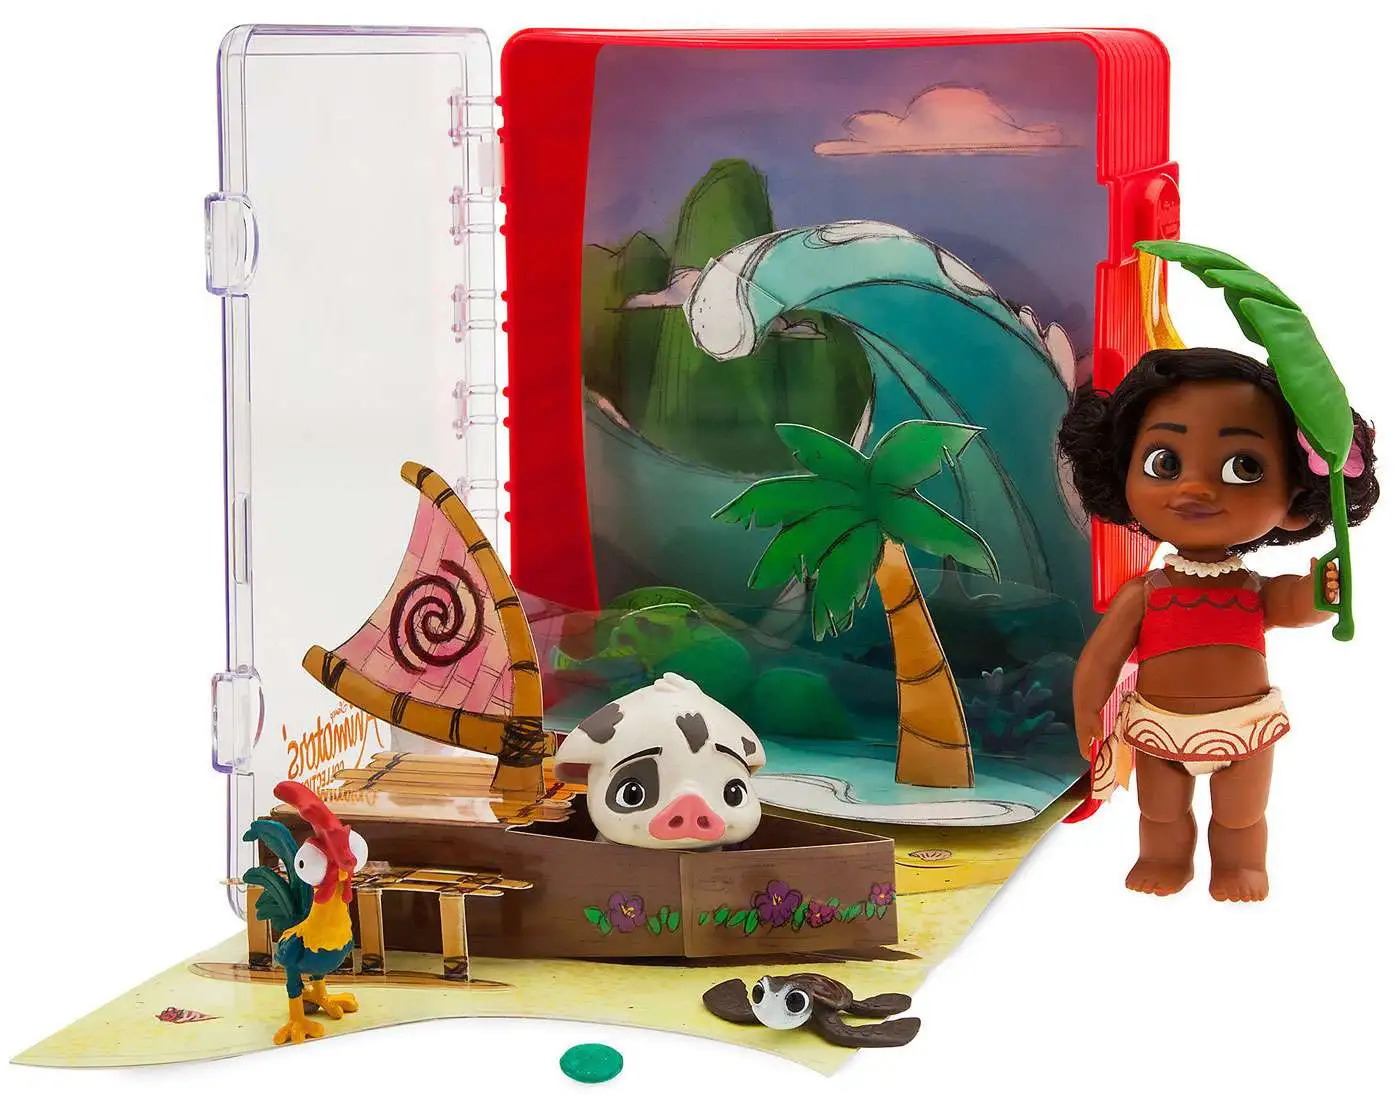 Disney Animators Collection Exclusive Lunch Box - ToyWiz